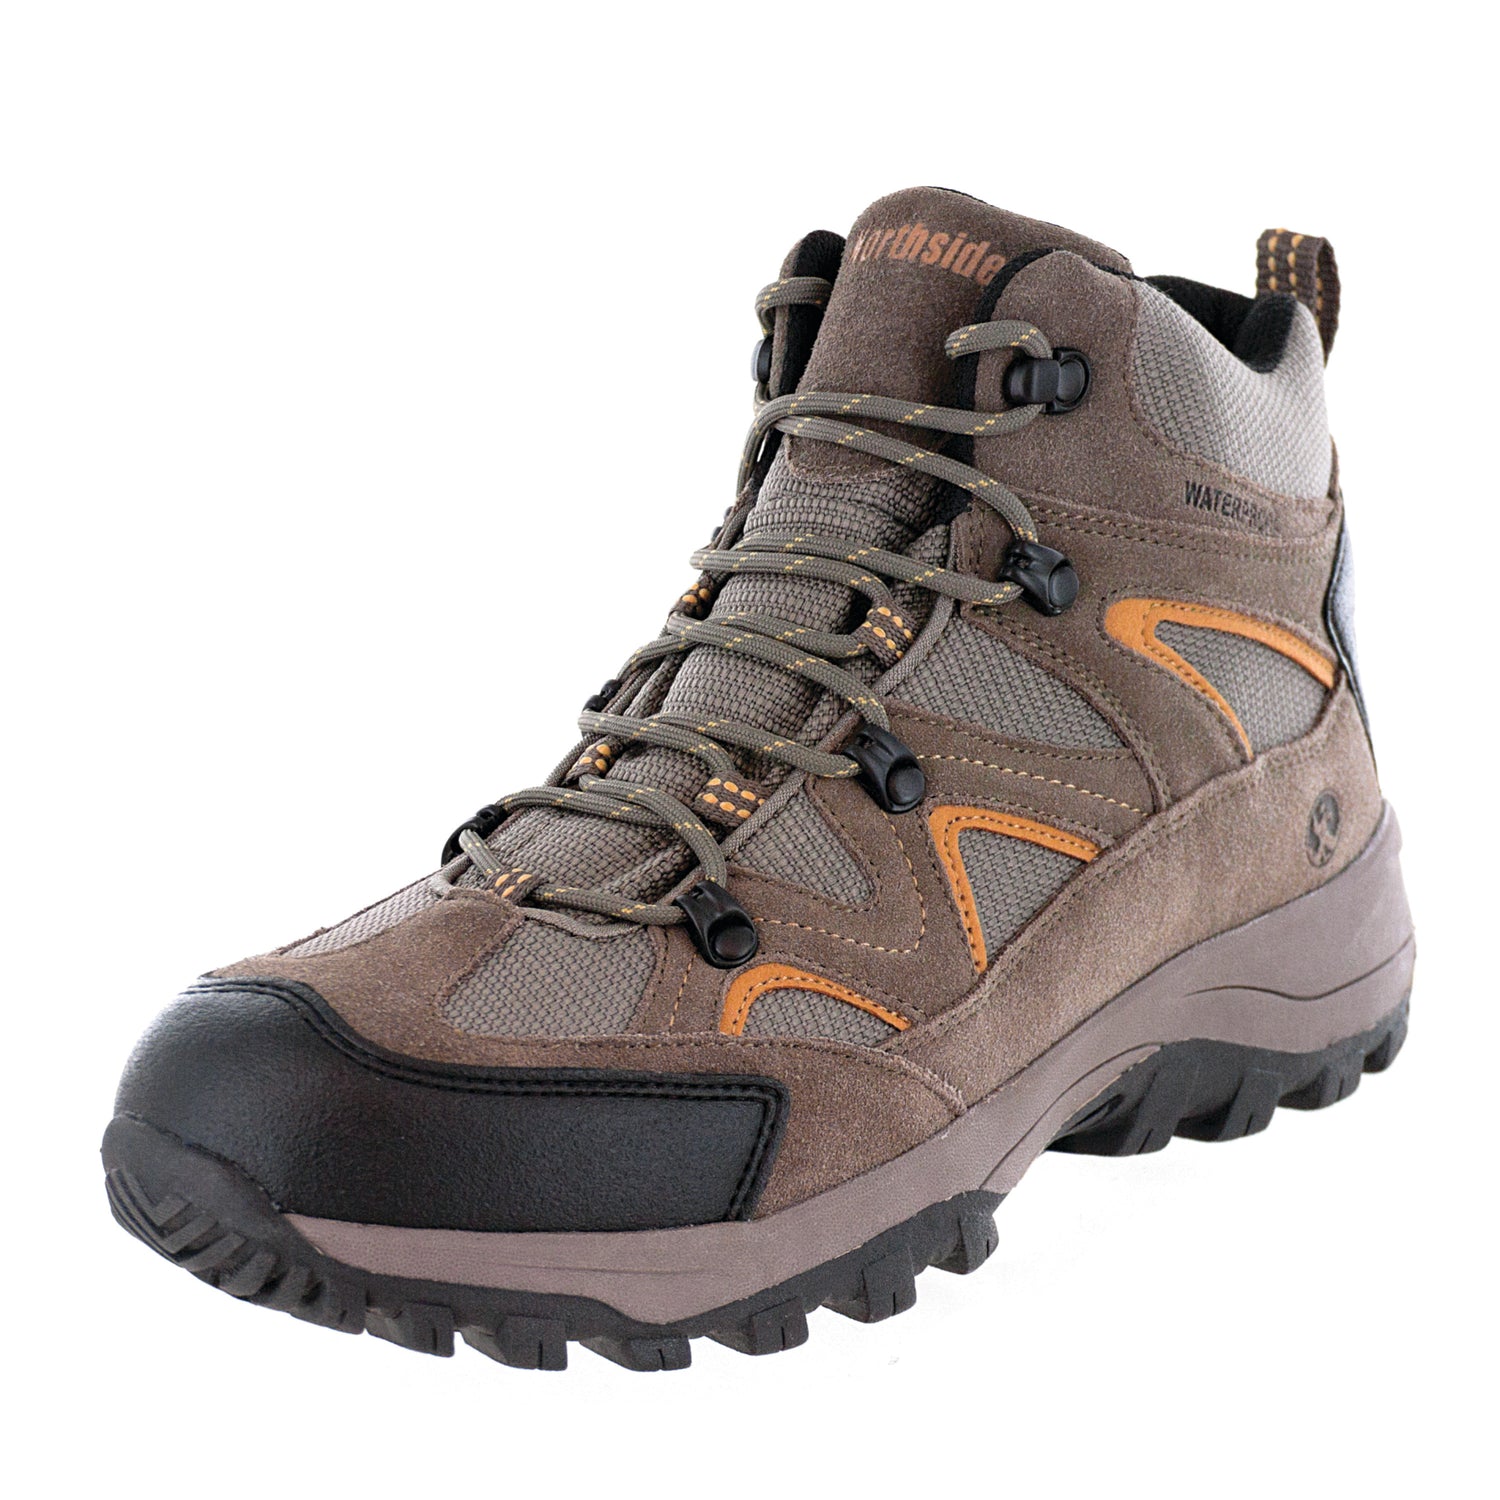 Men's Snohomish Mid Waterproof Hiking Shoes